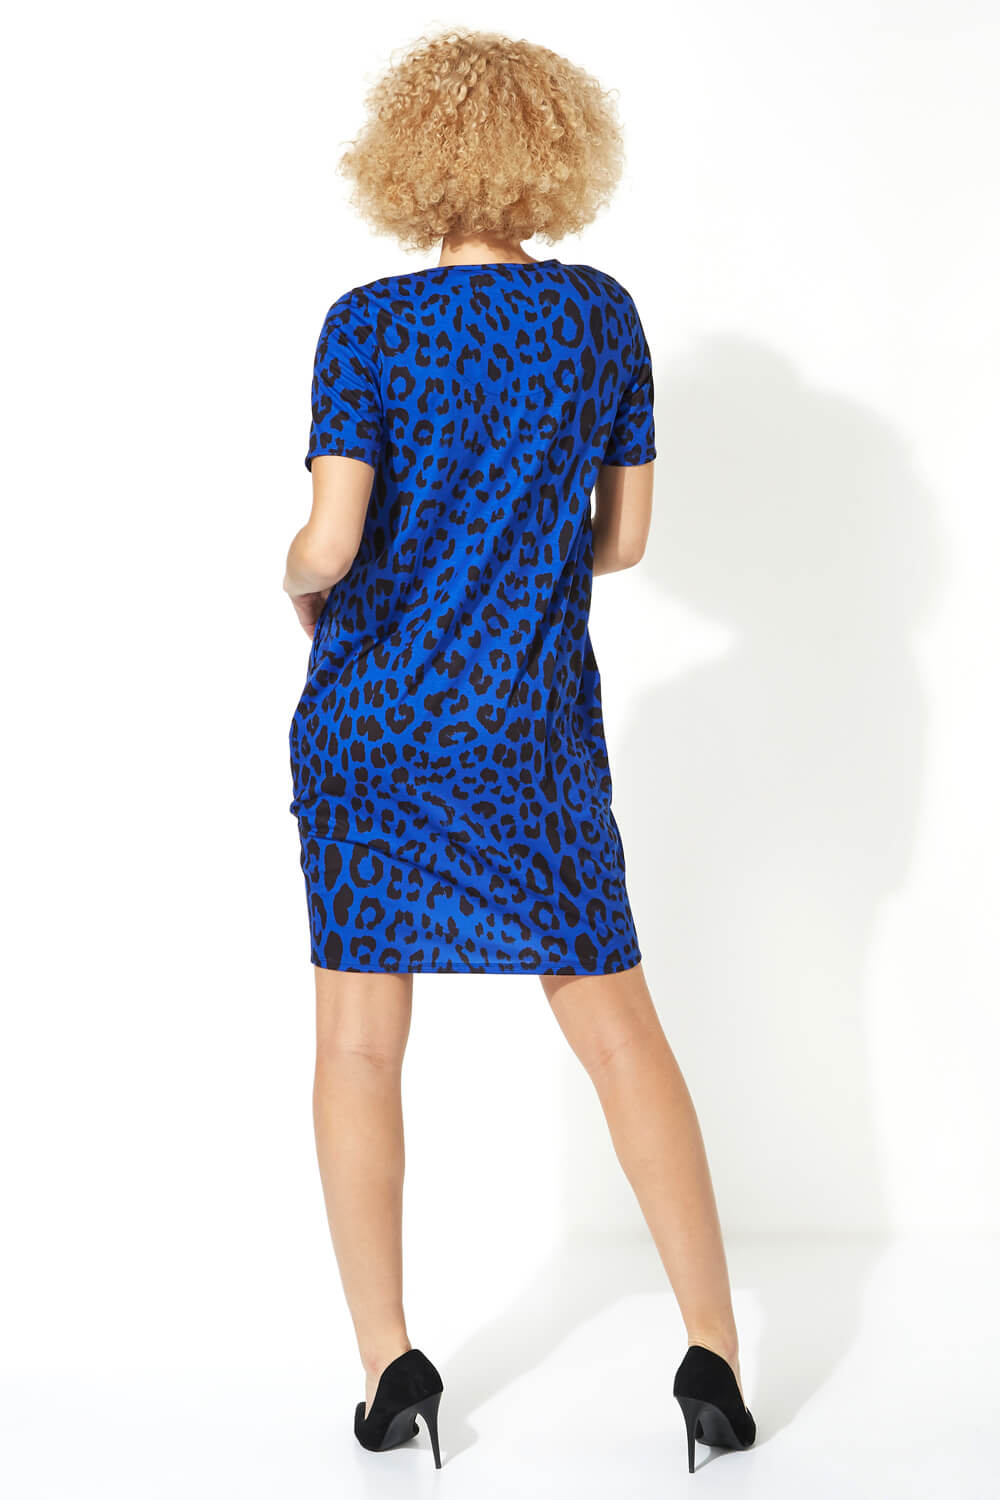 Royal Blue Animal Leopard Print Dress, Image 3 of 5